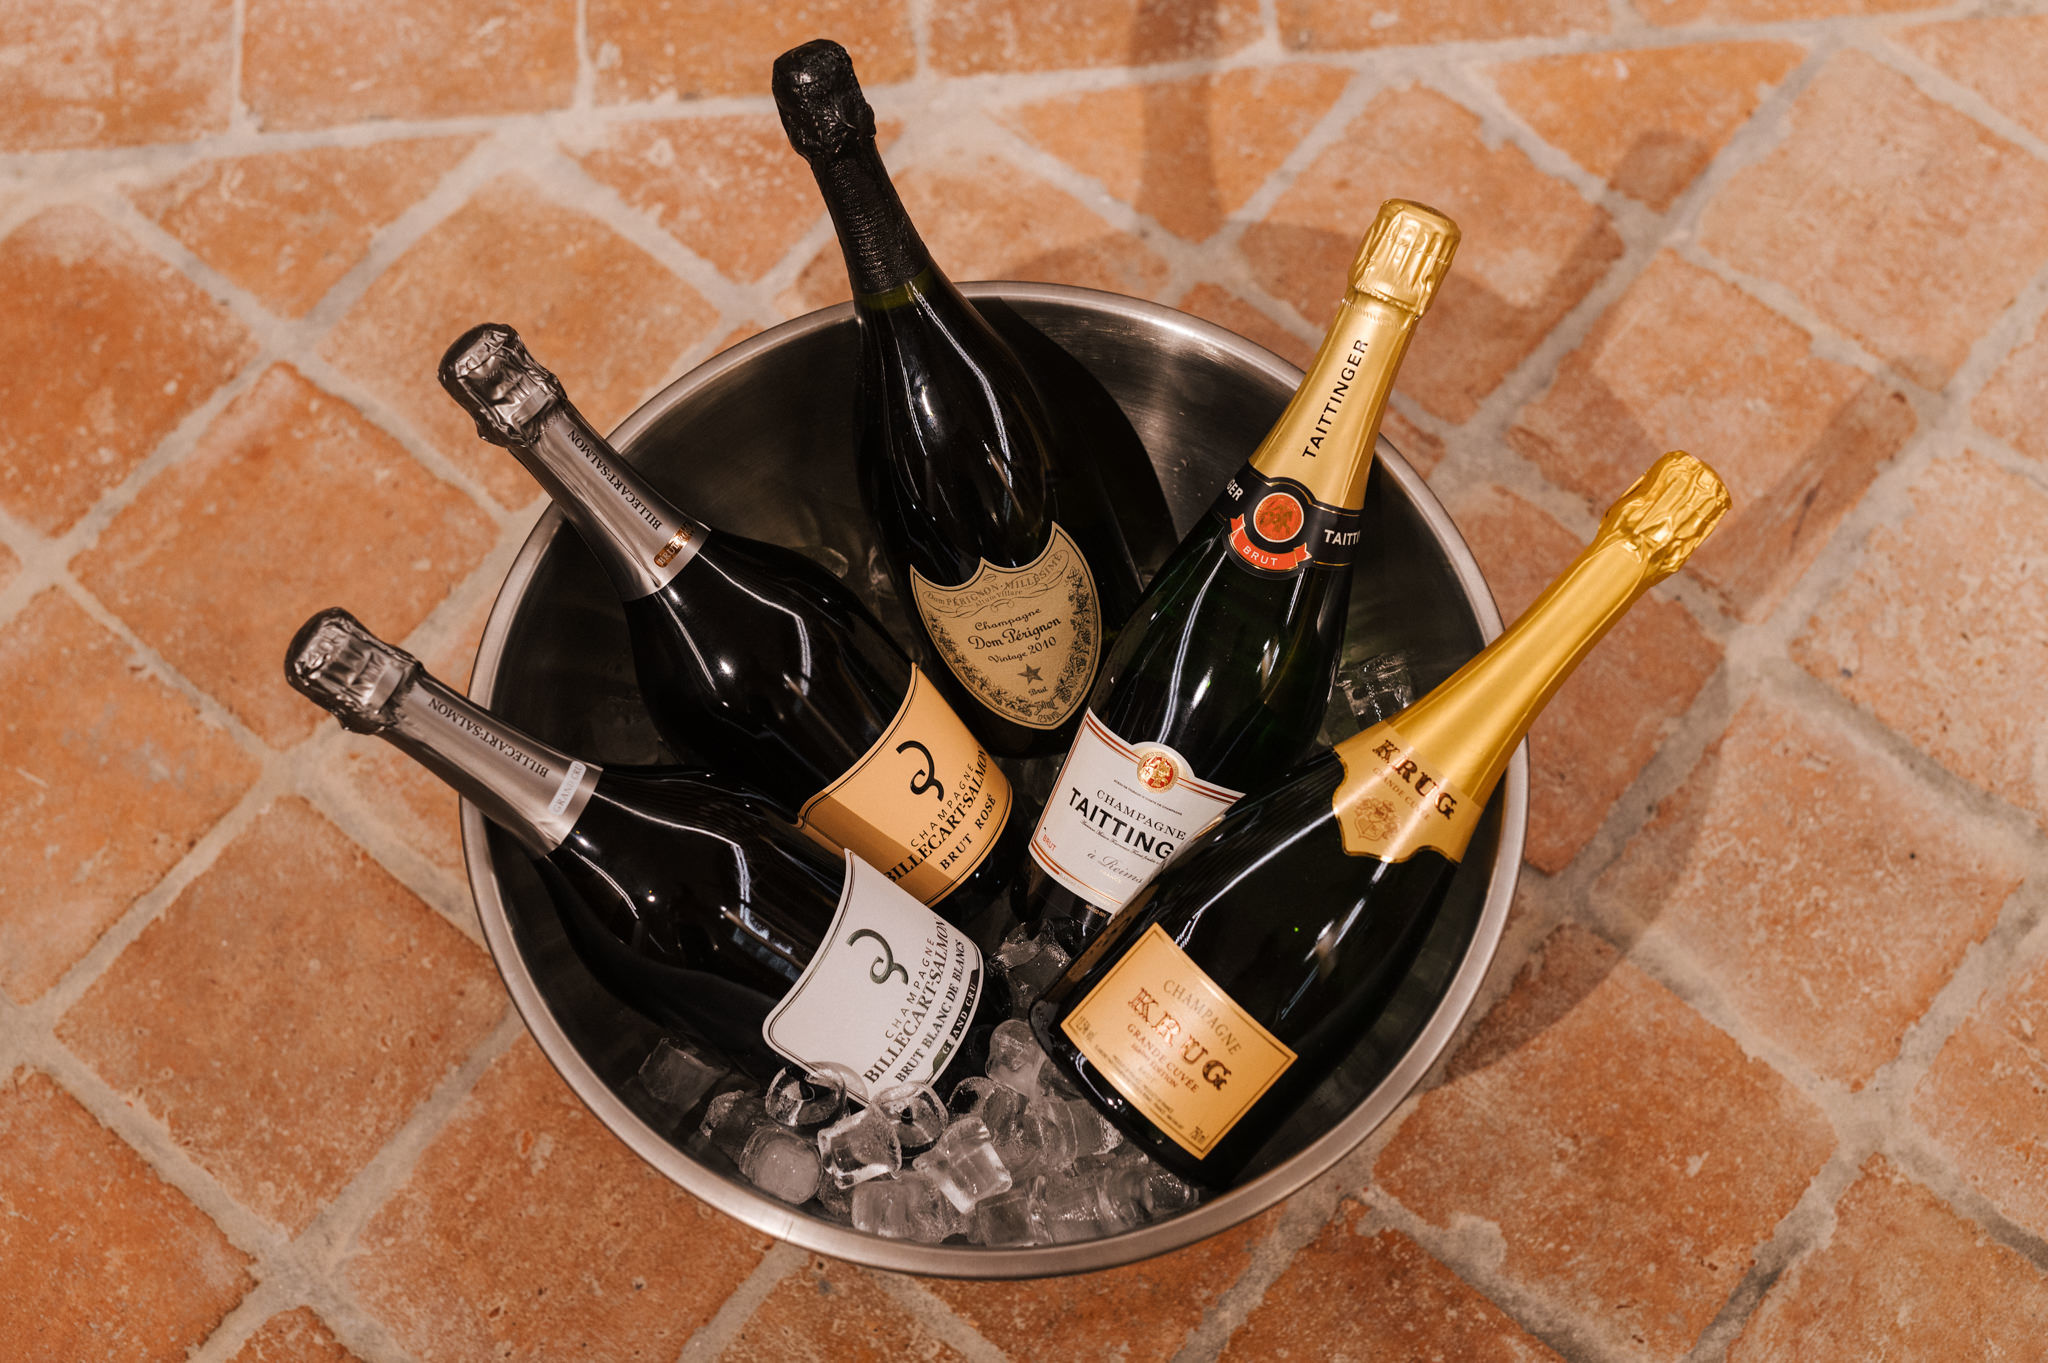 Chateau Trnova wine and champagne